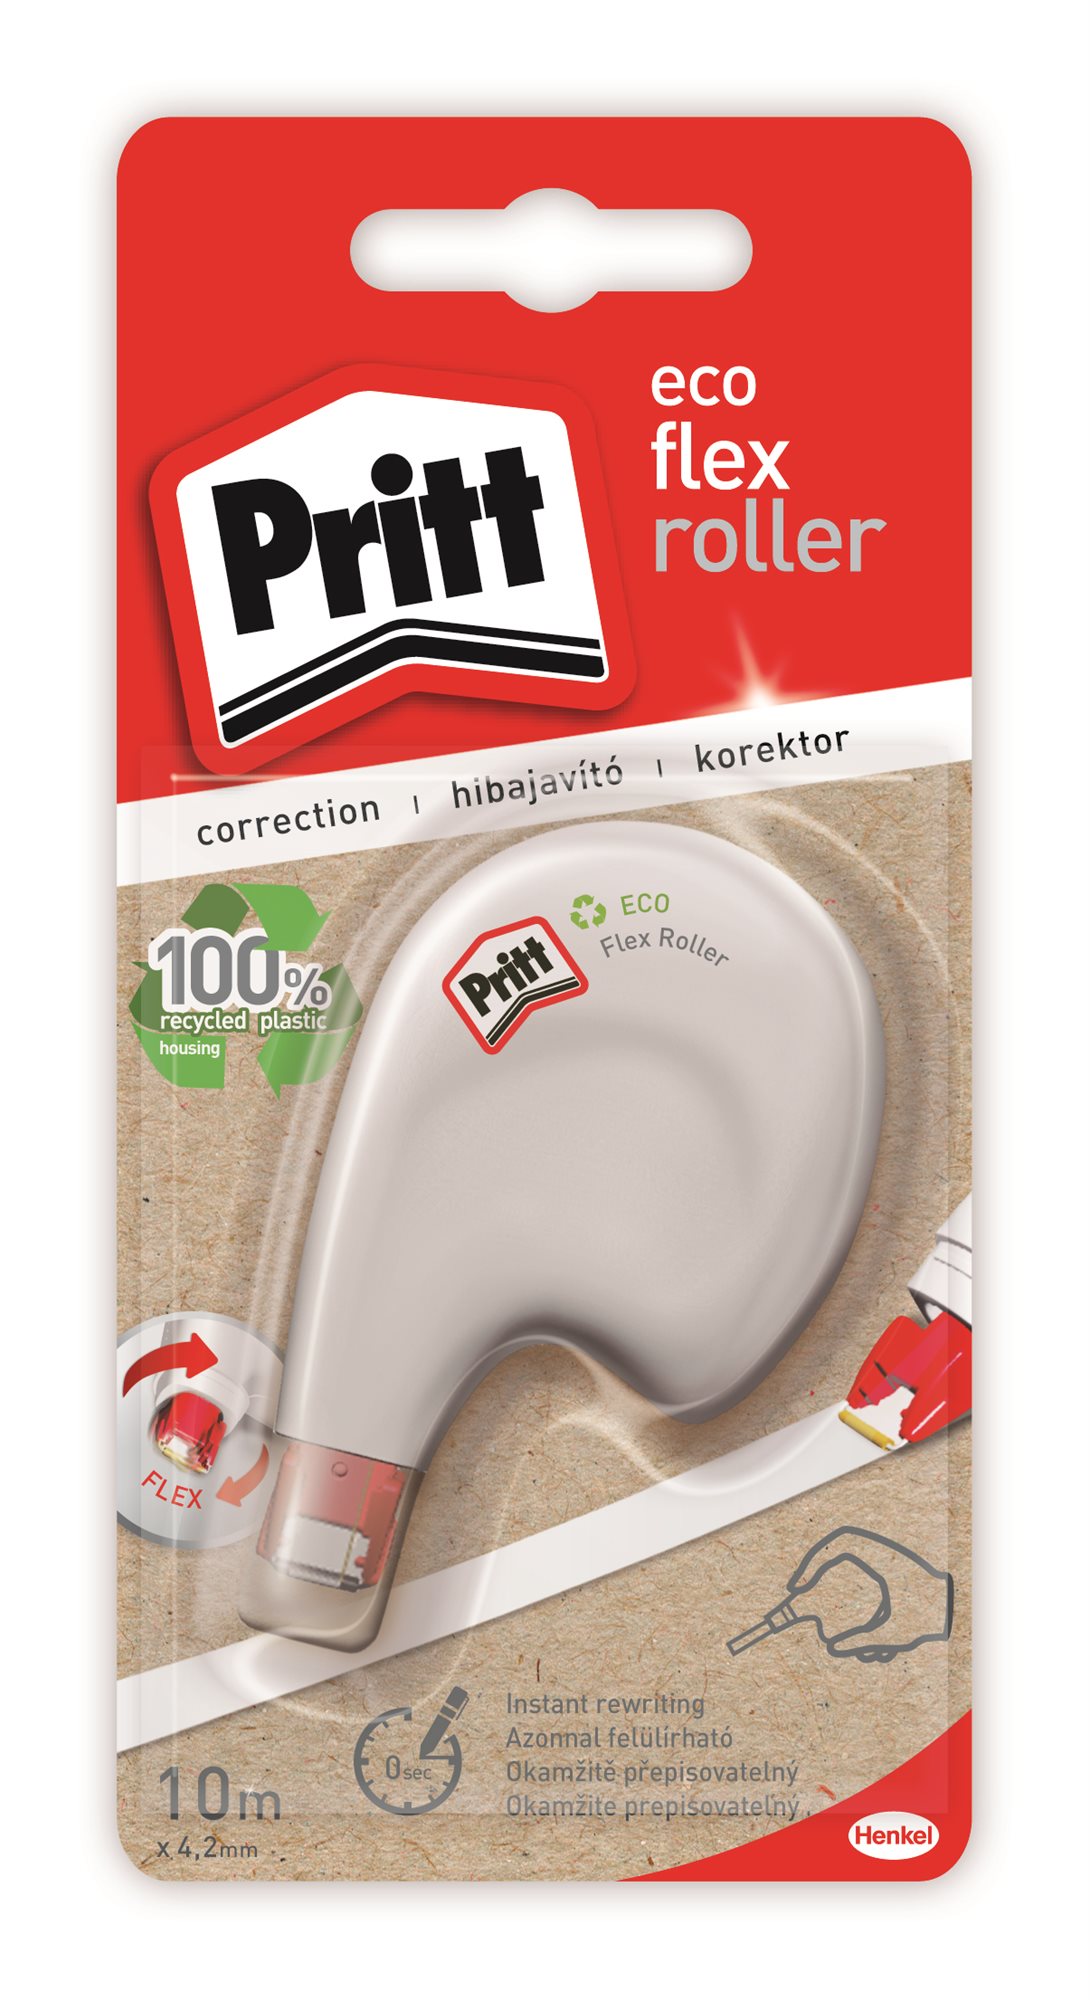 PRITT Eco Flex roller